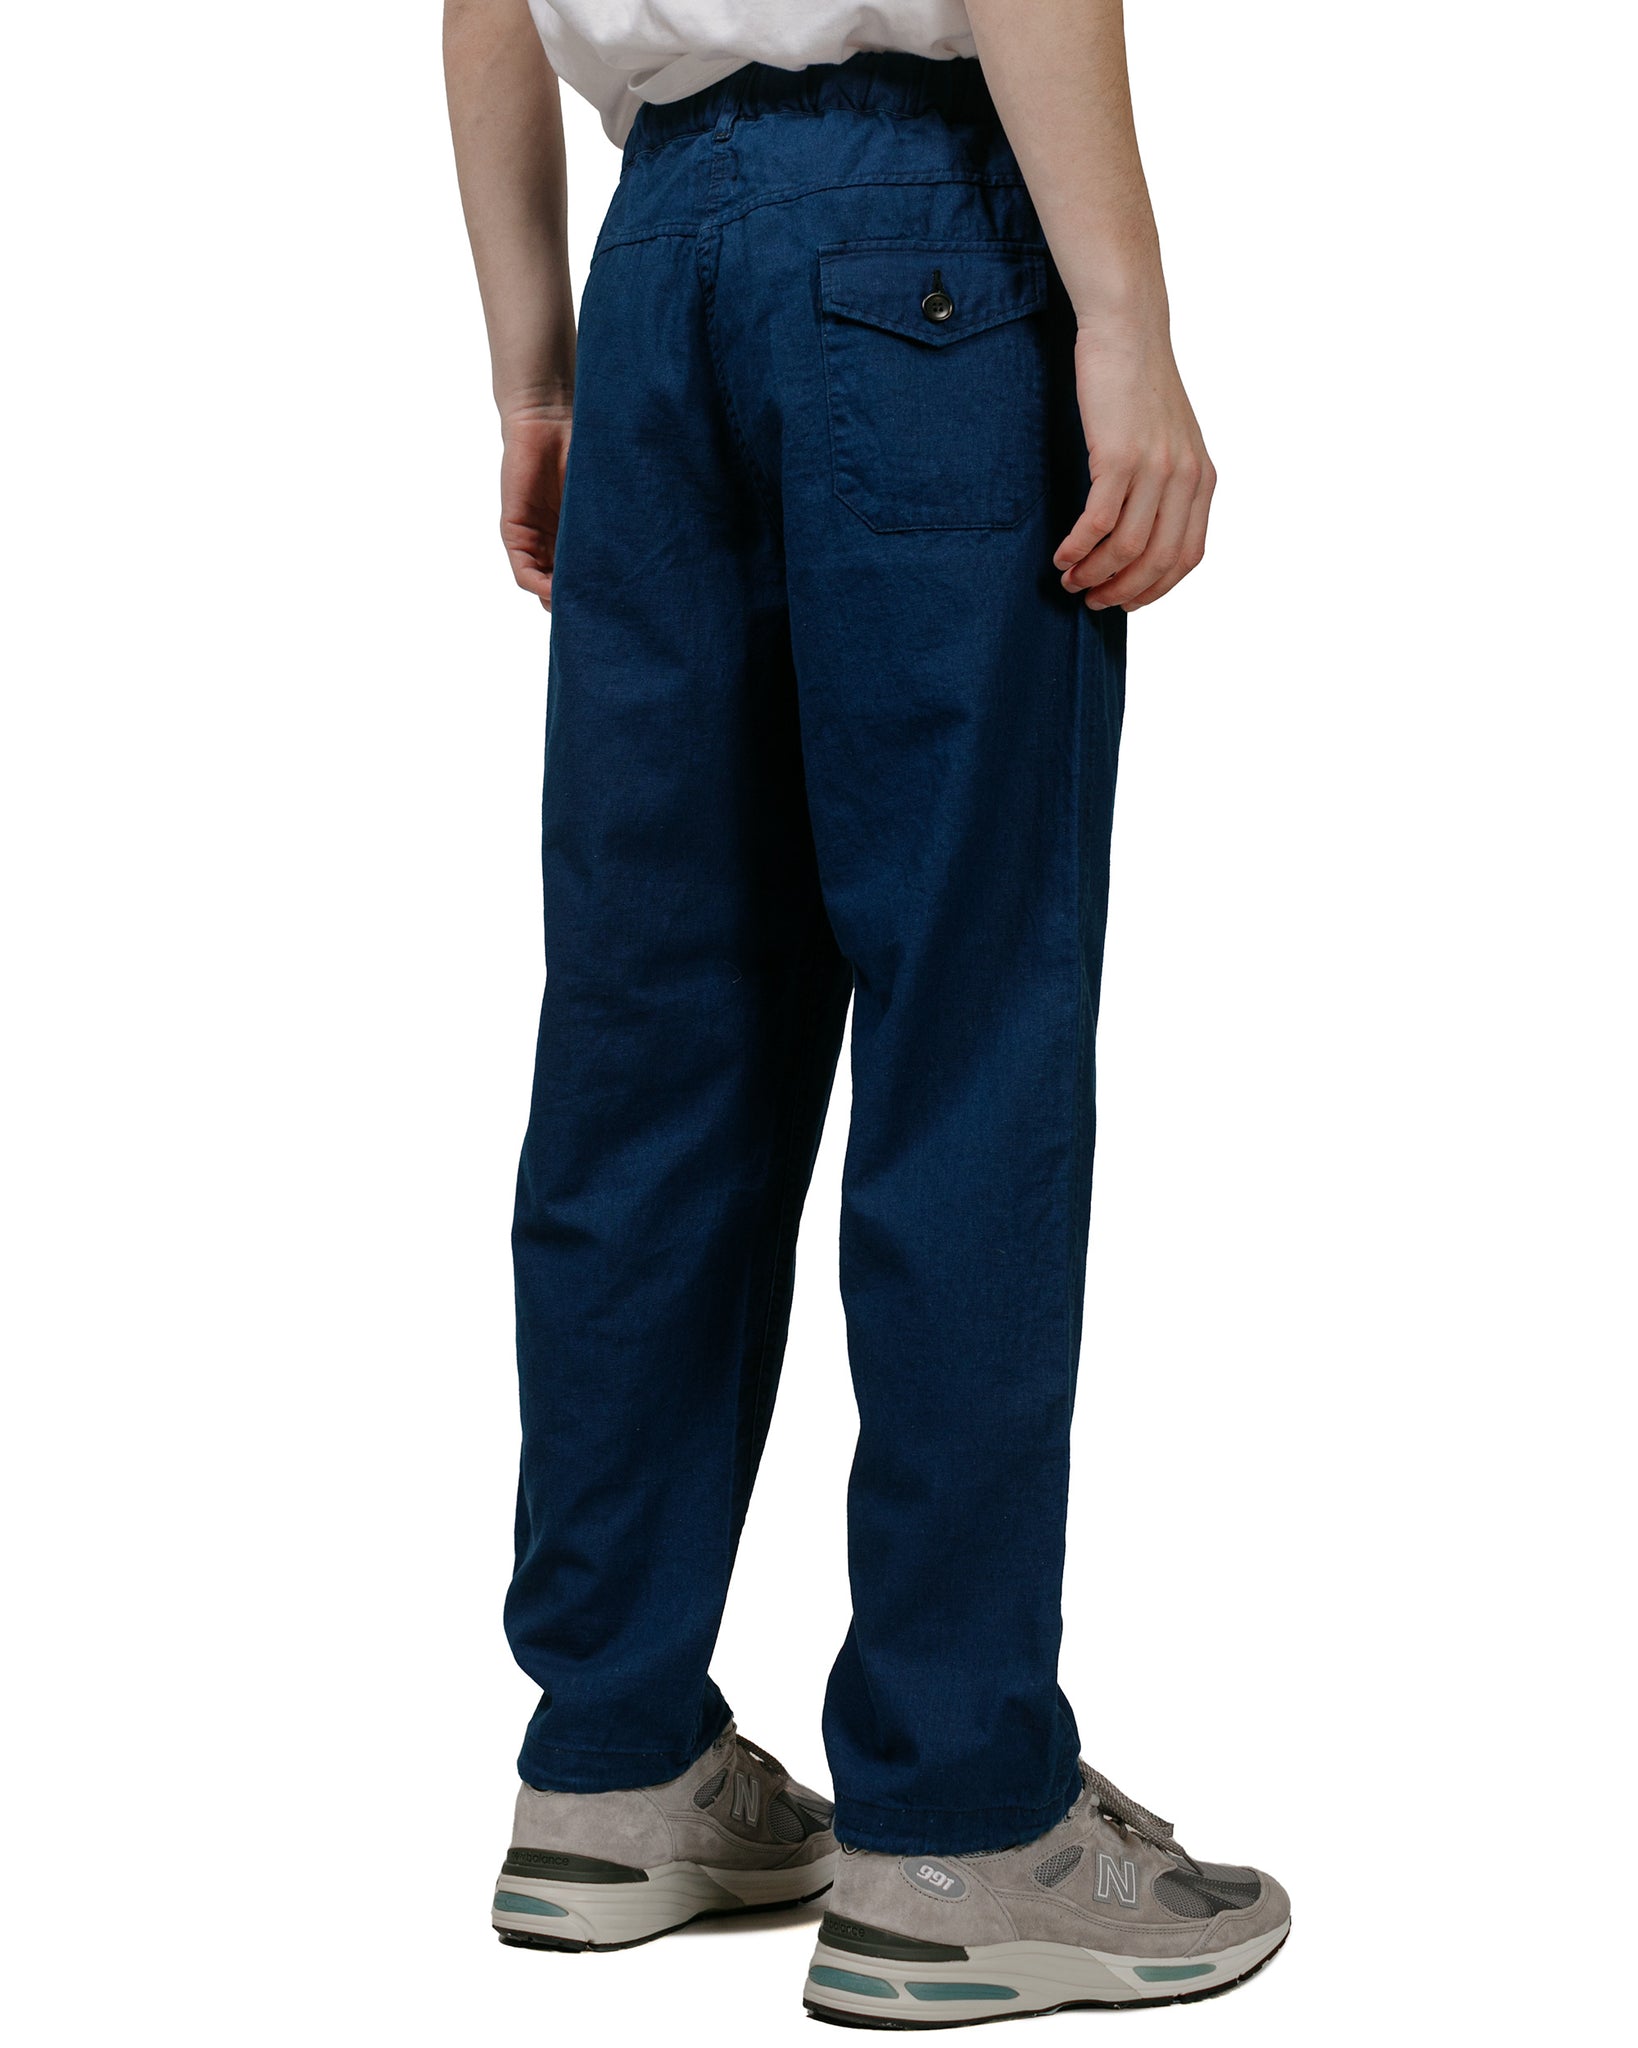 Post O'Alls E-Z Travail Pants Cotton/Linen Sheeting Indigo model back